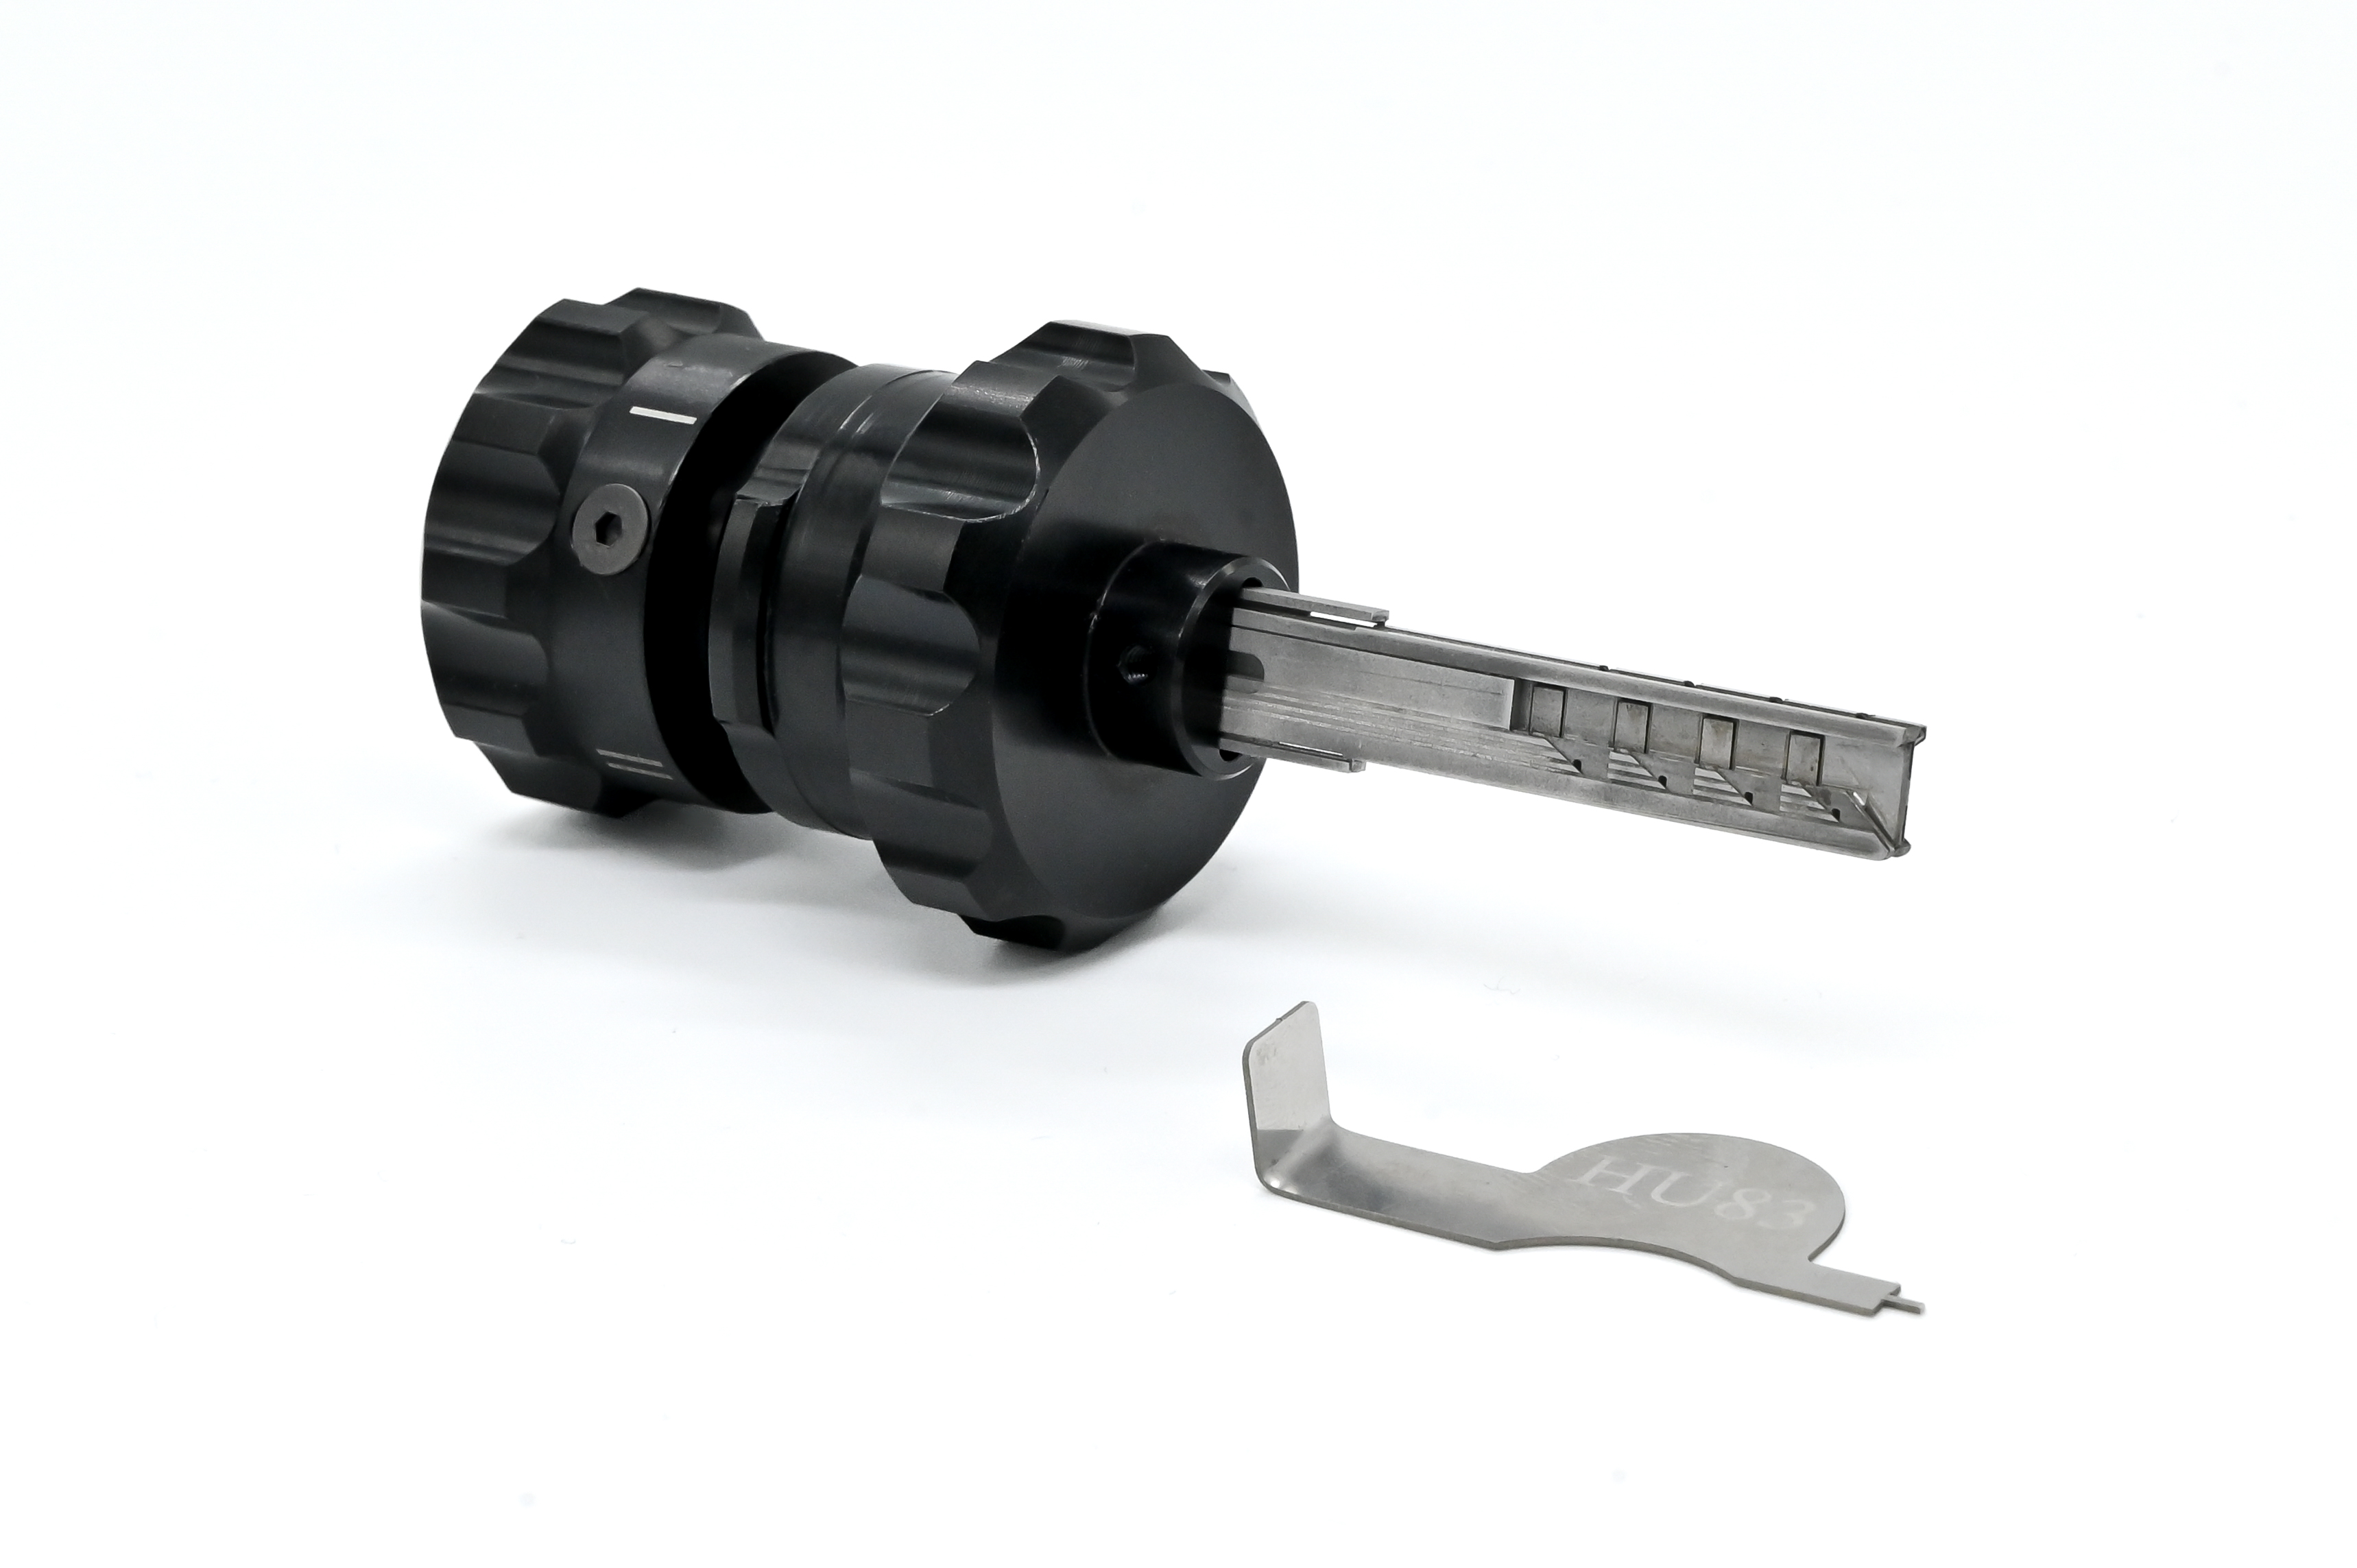 ISEO Pump Lock Decoder ➮ Professional Auto Decoders and locksmith